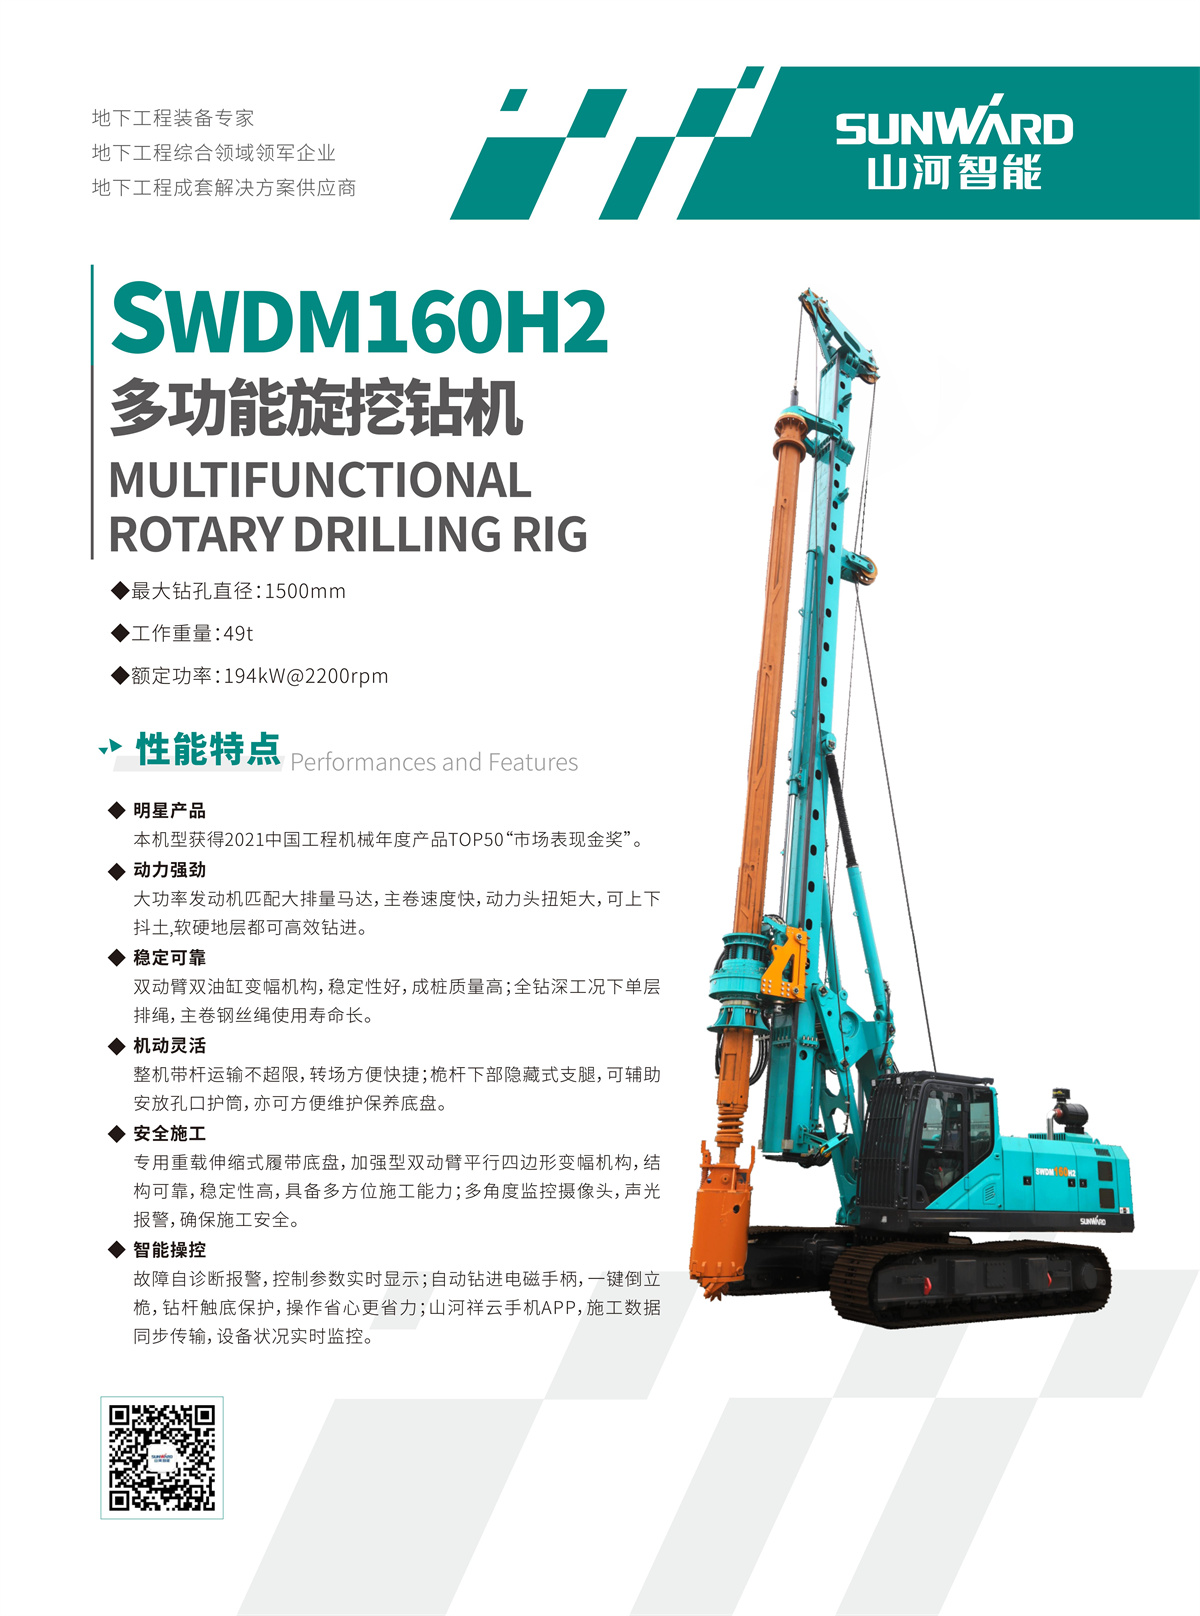 SWDM160H2 中型多功能旋挖钻机